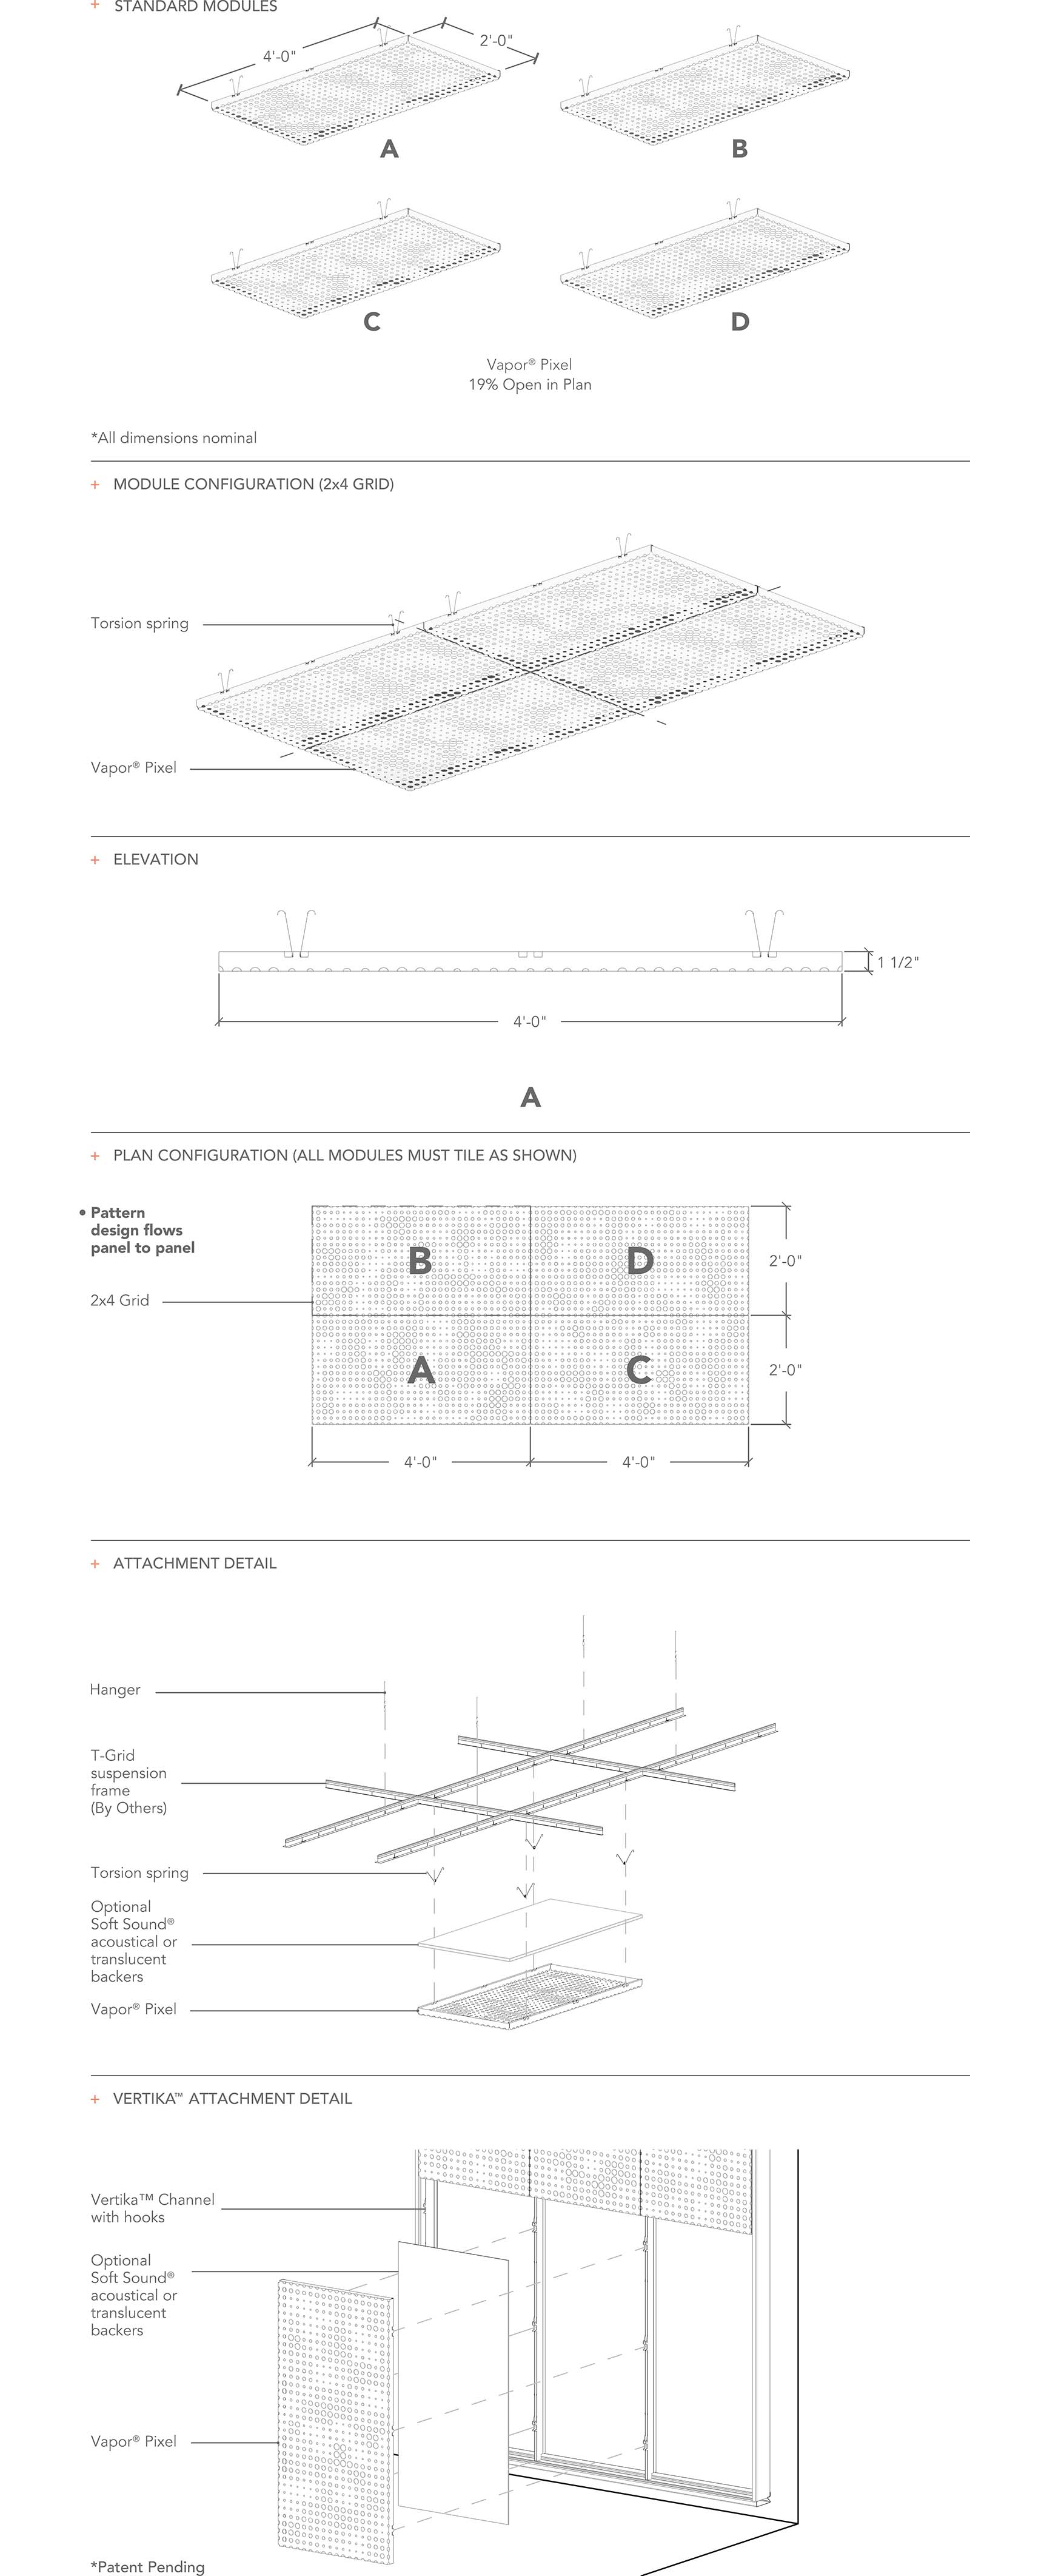 Aktura Vapor Pixel Standard Ceiling Systems Acoustical System